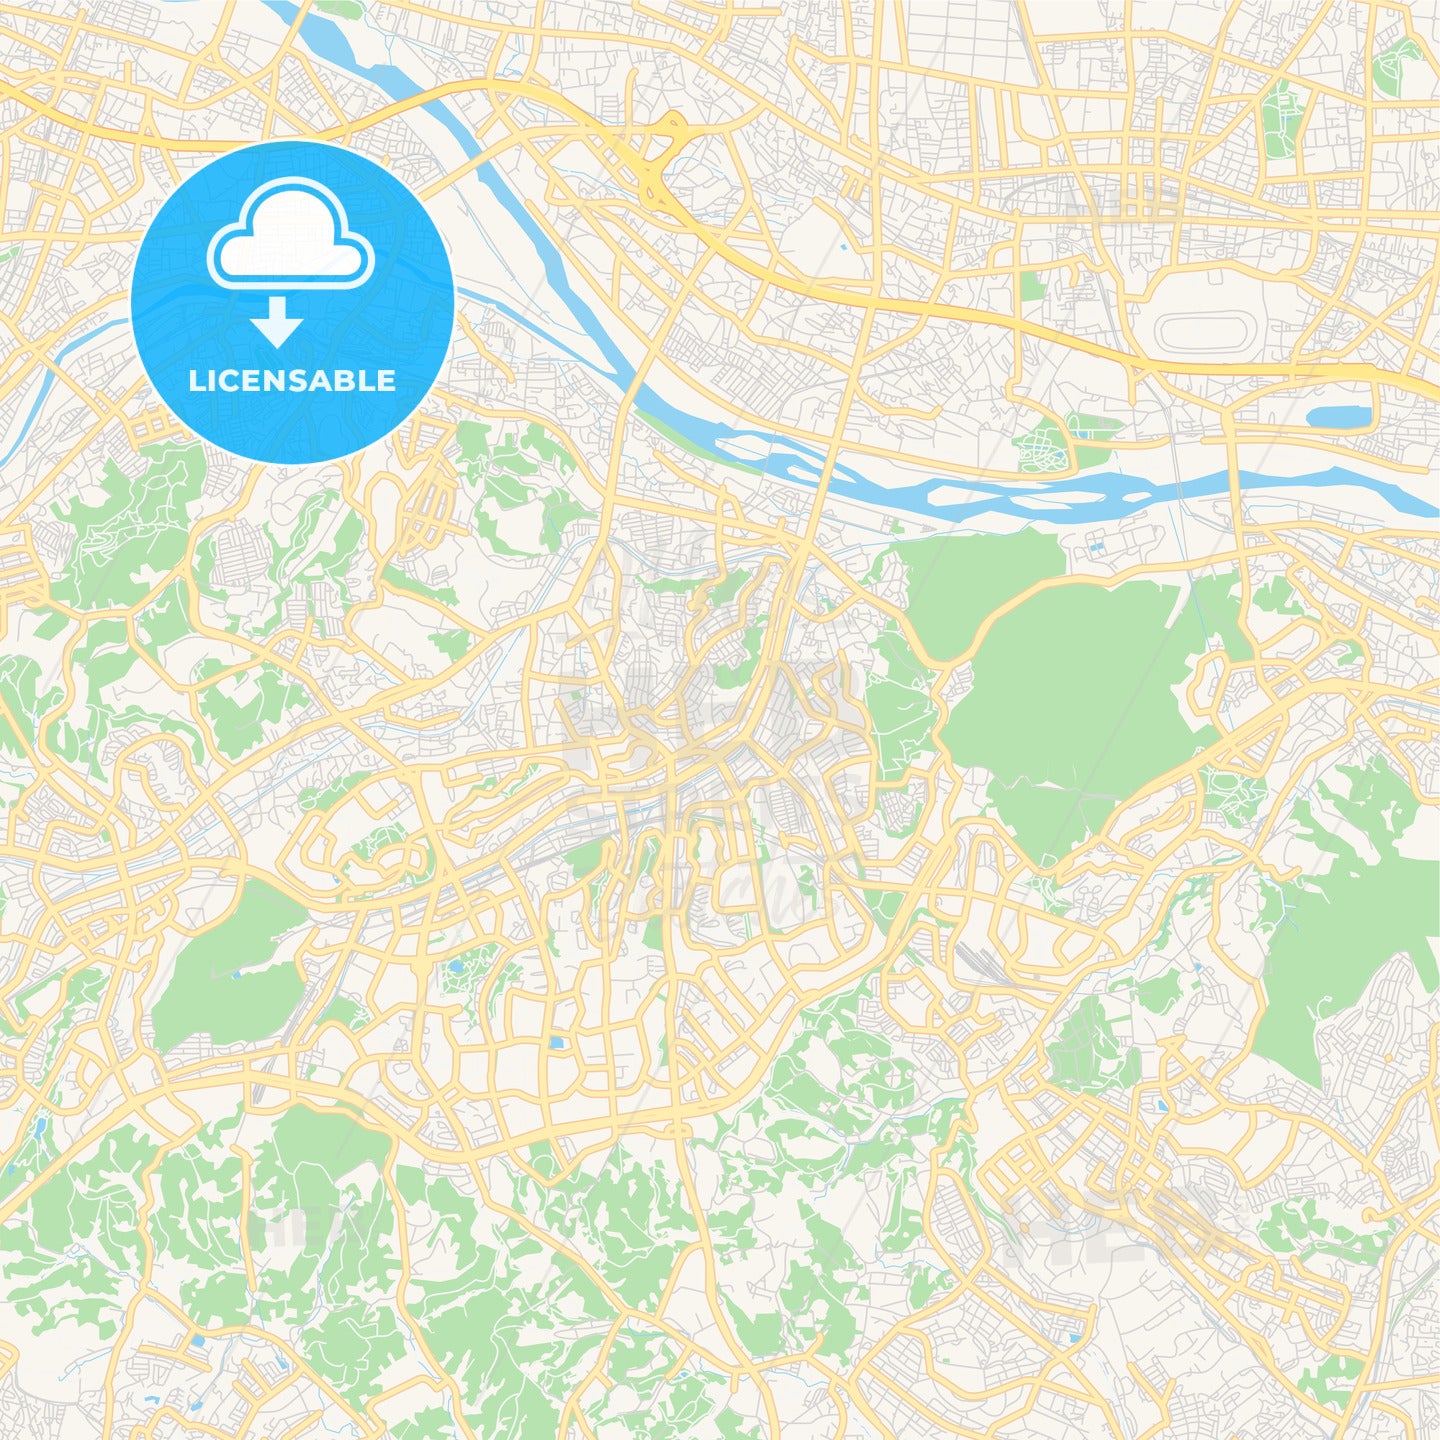 Printable street map of Tama, Japan